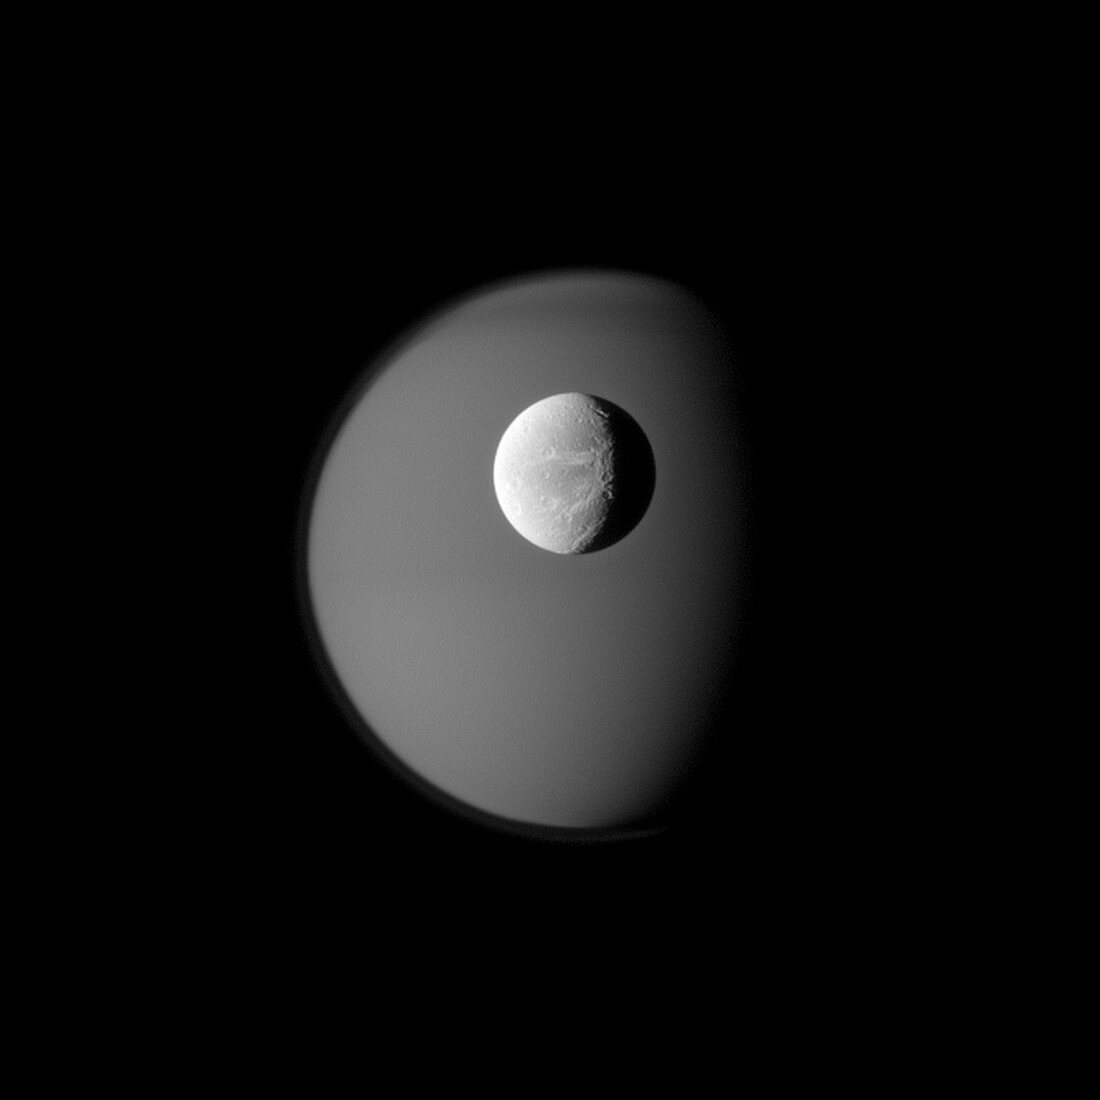 Saturn's moon Dione,Cassini image